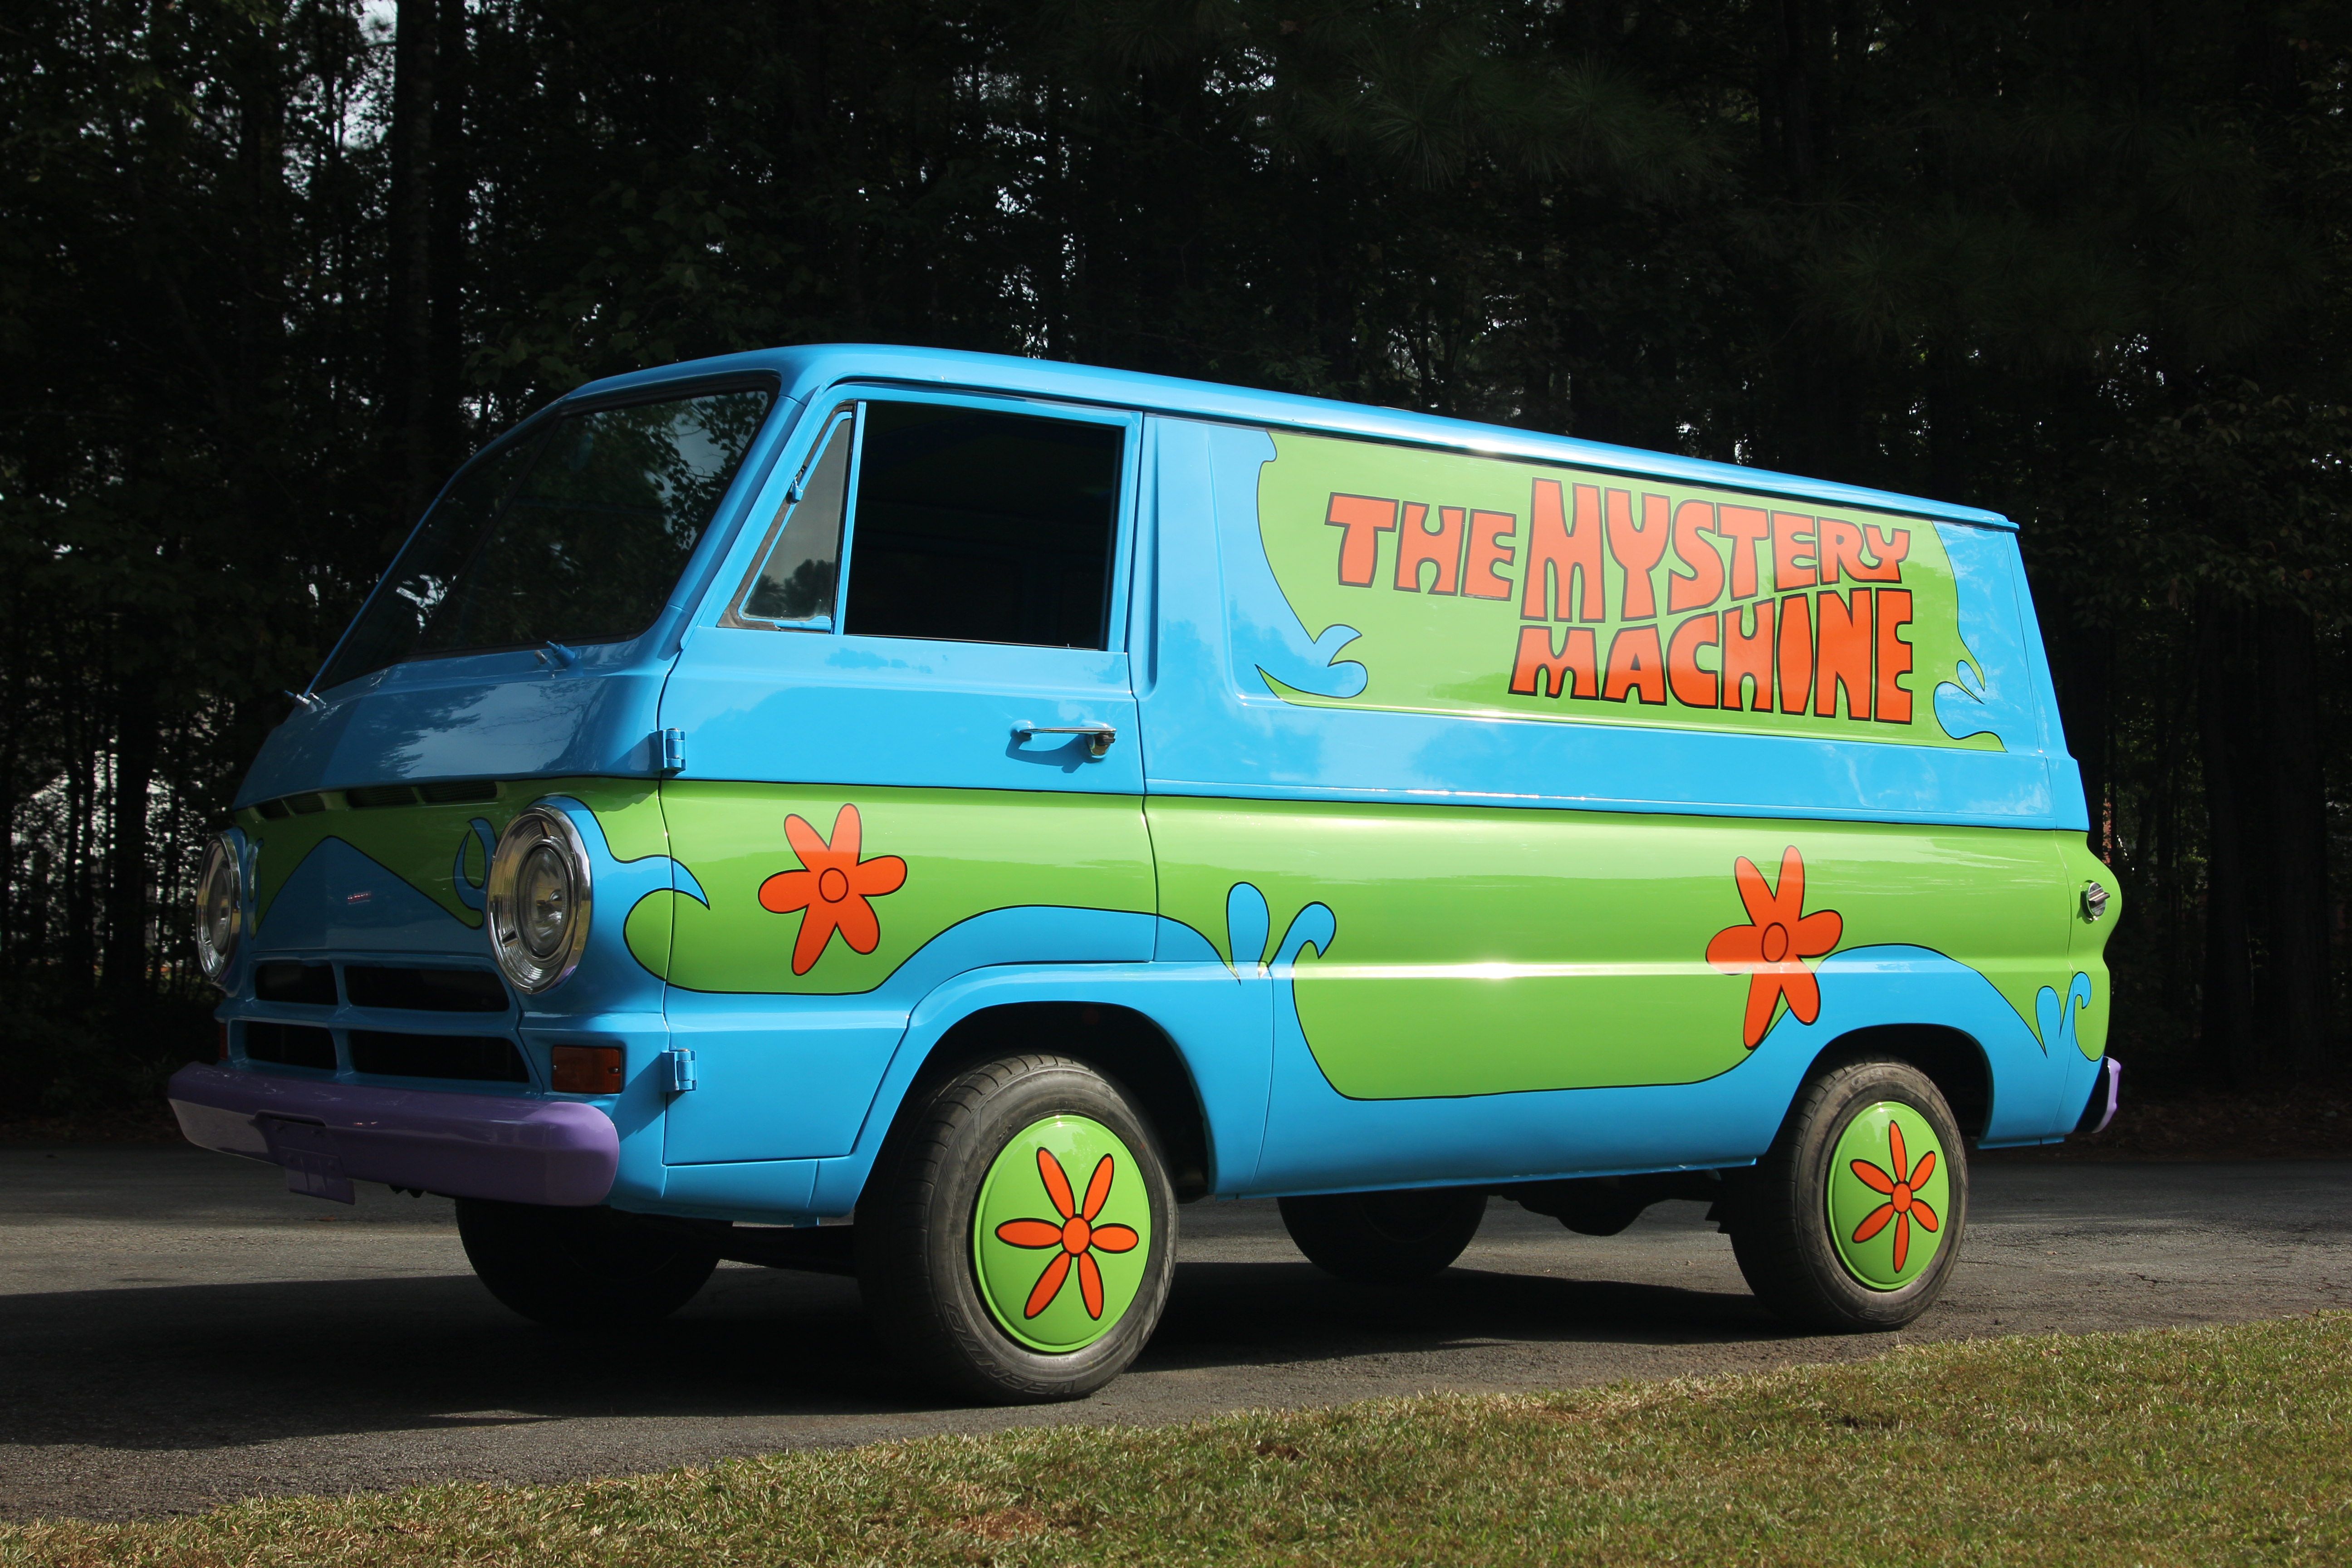 Scooby Doo Mystery Machine